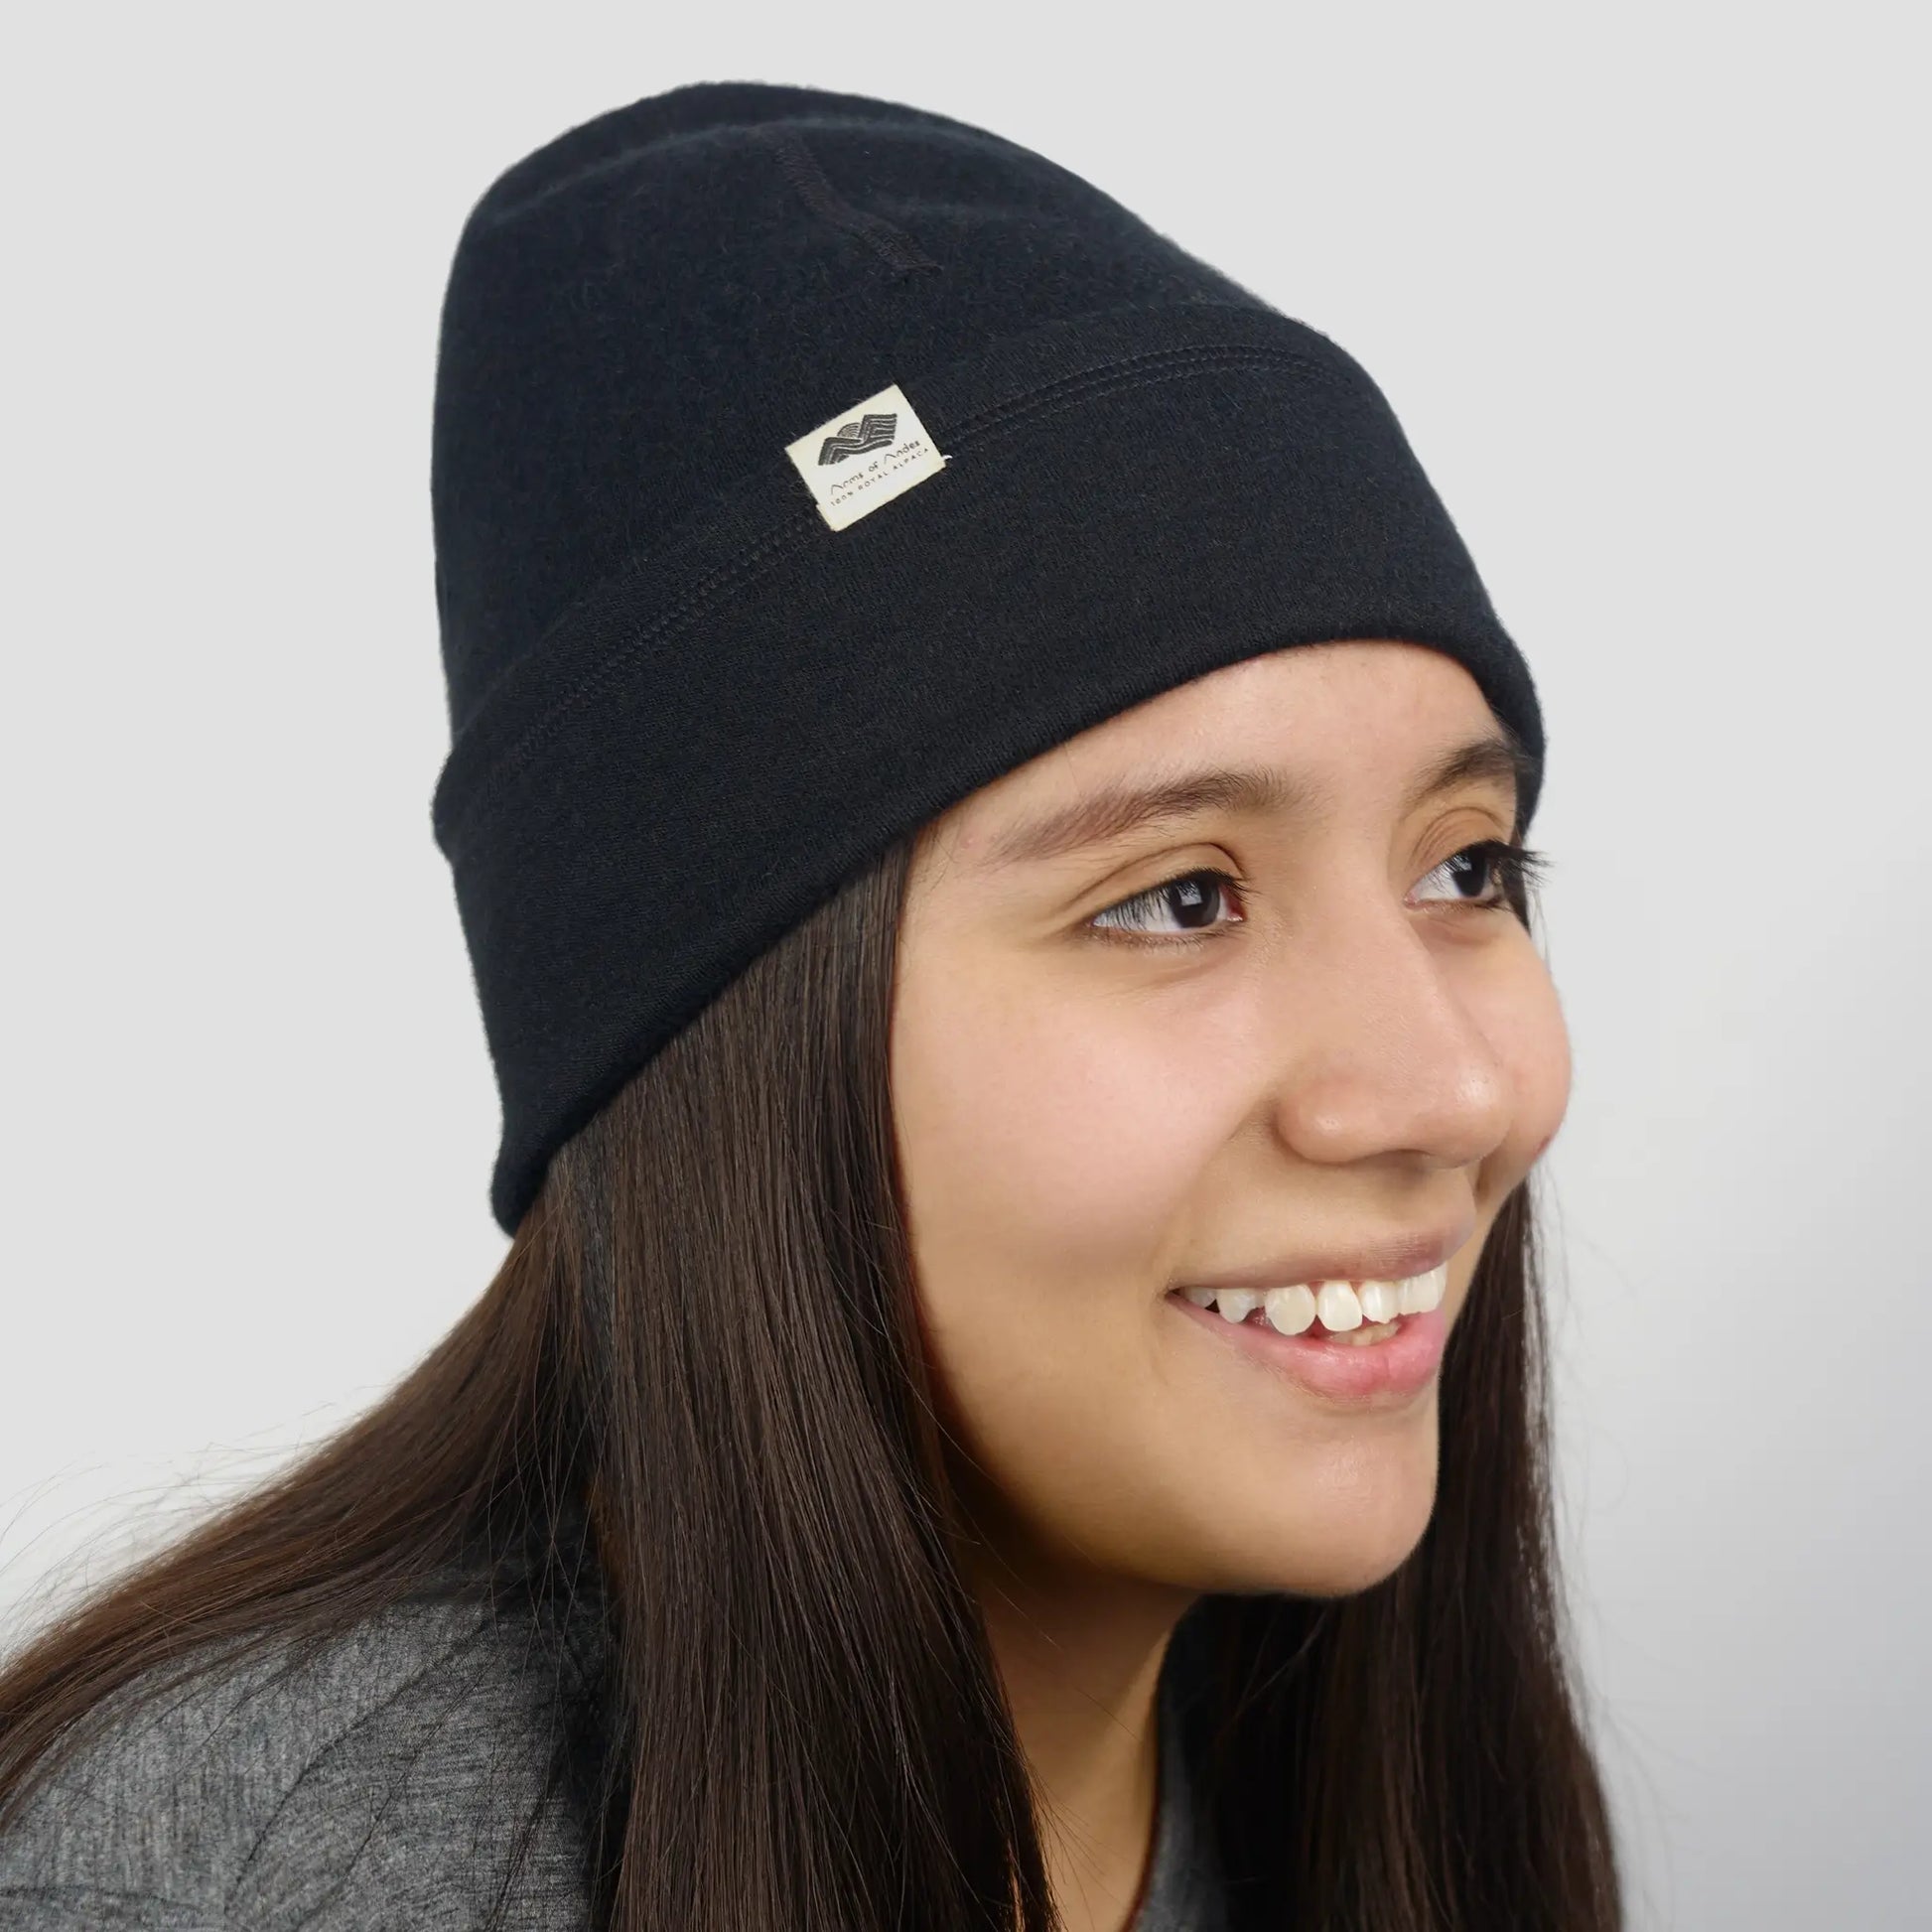 unisex ecological folded beanie hat lightweight color black